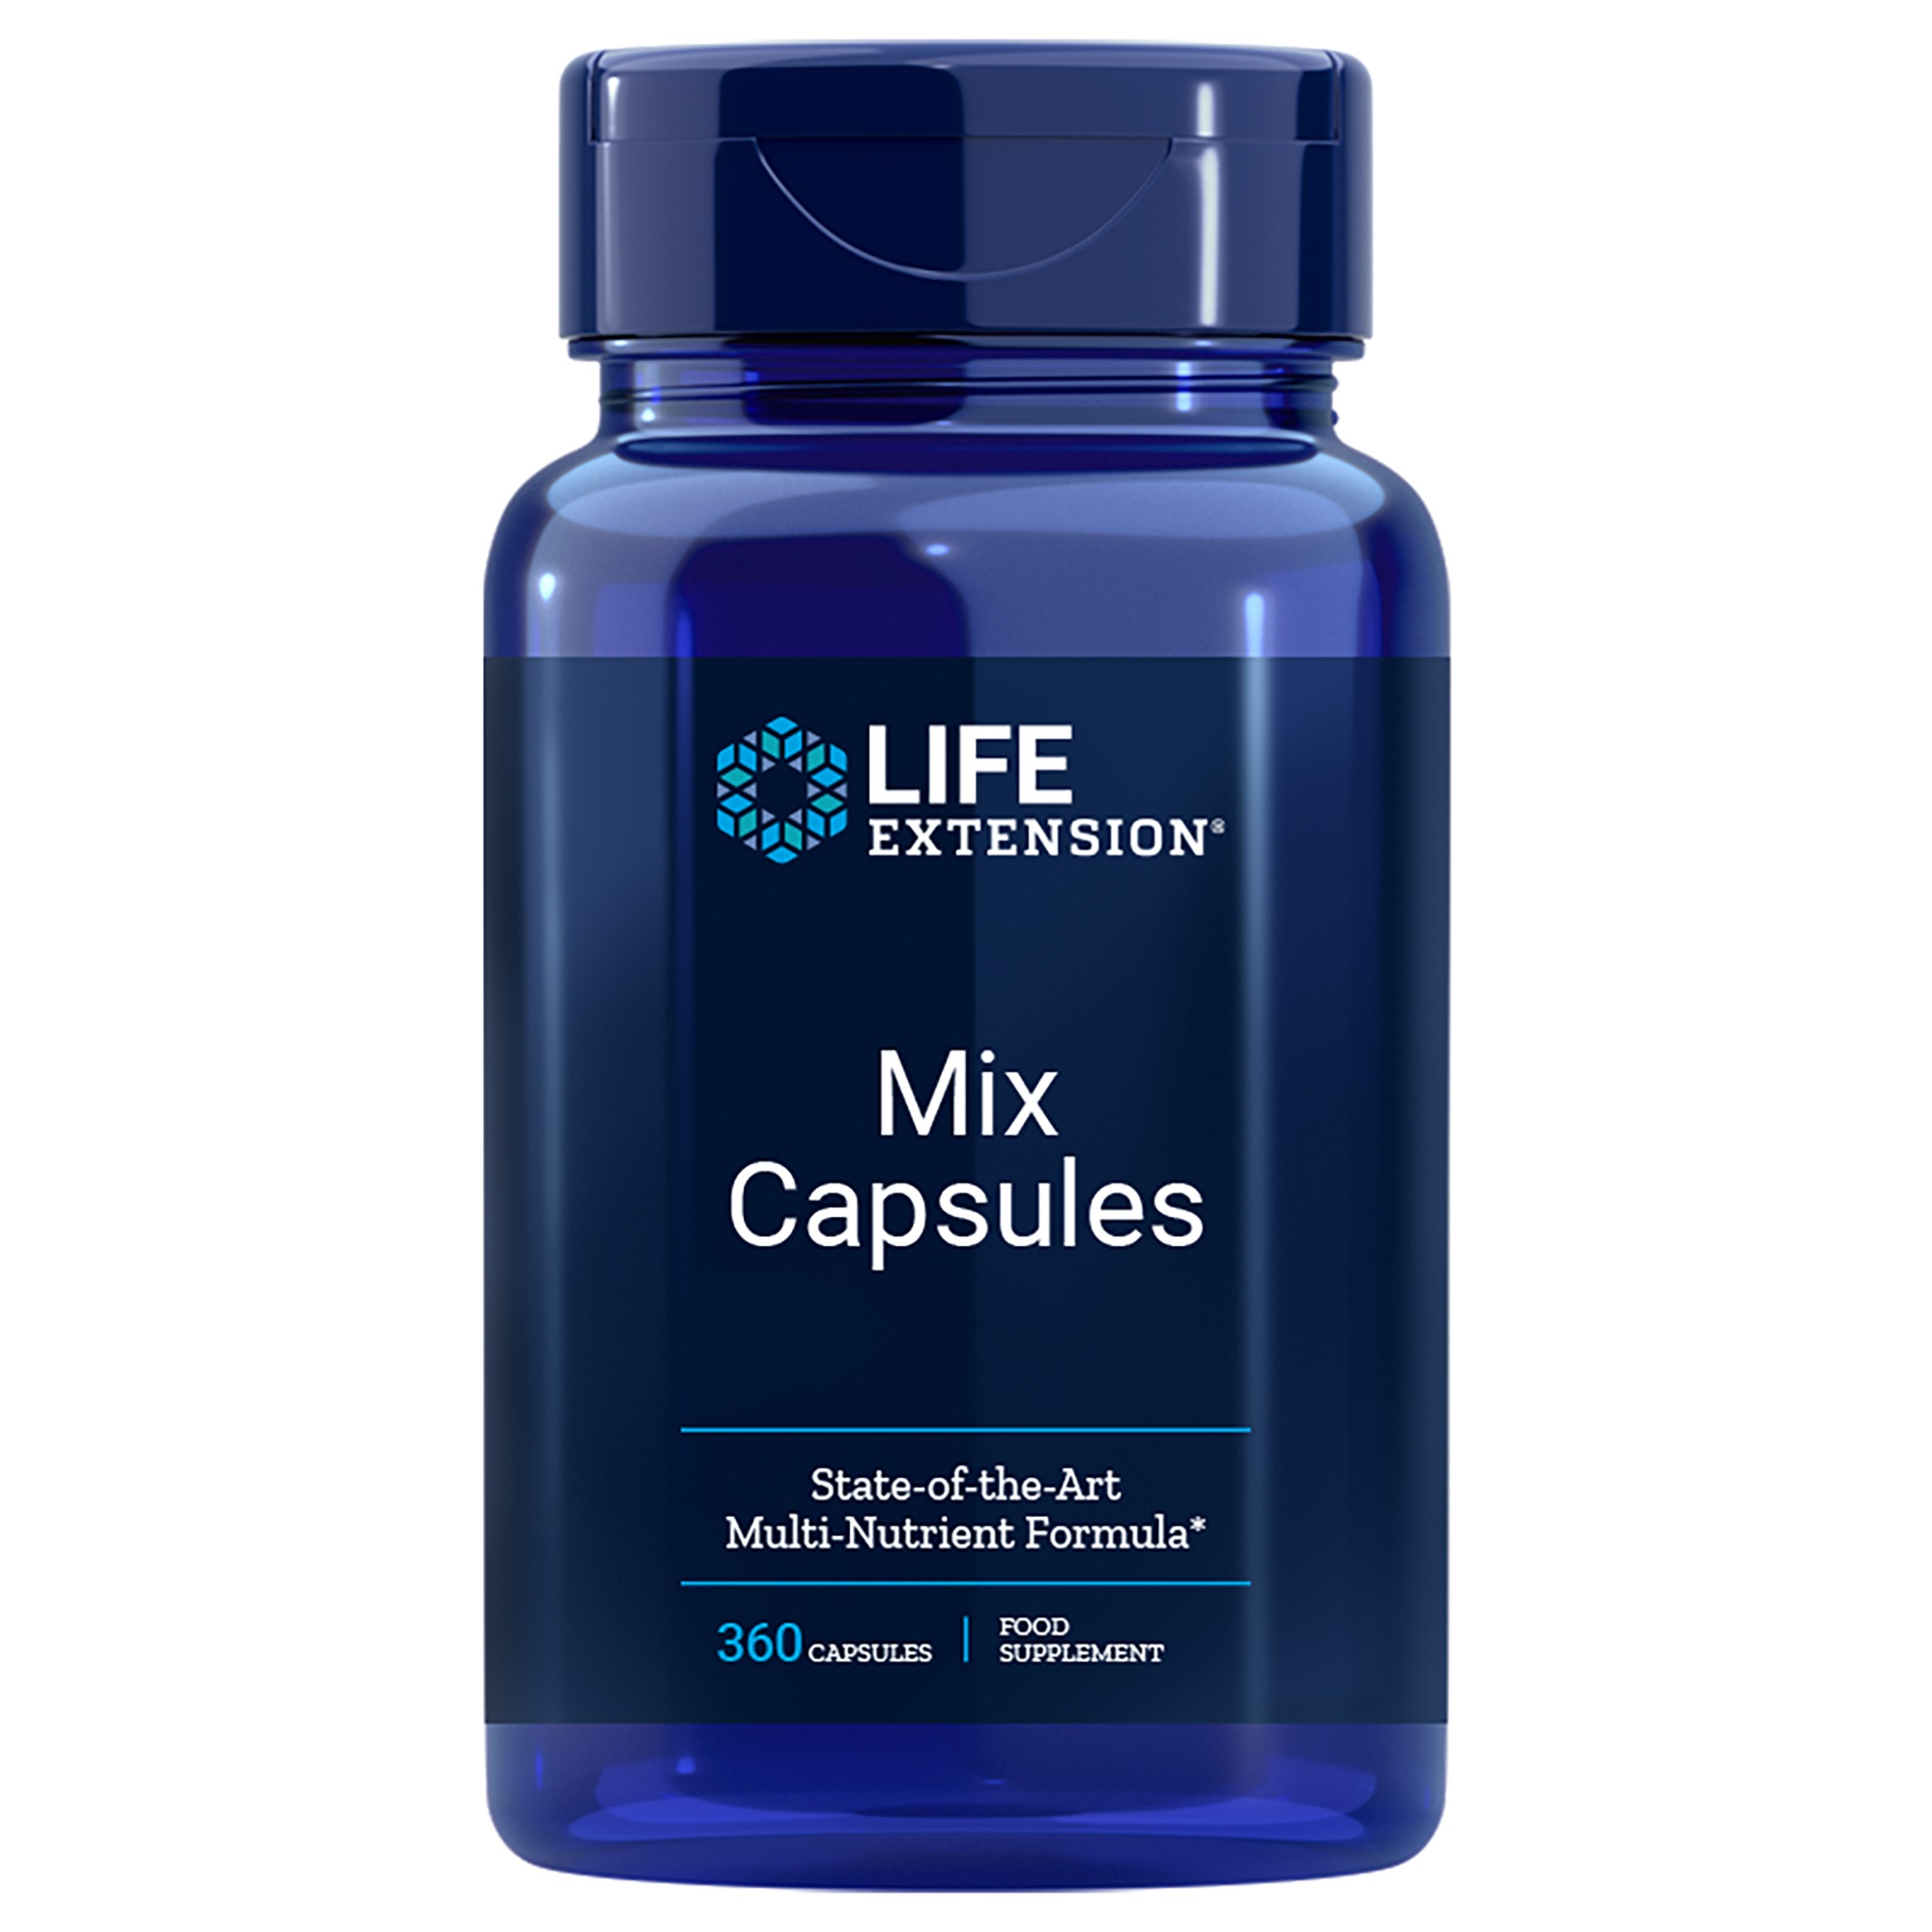 LifeExtension Mix Capsules